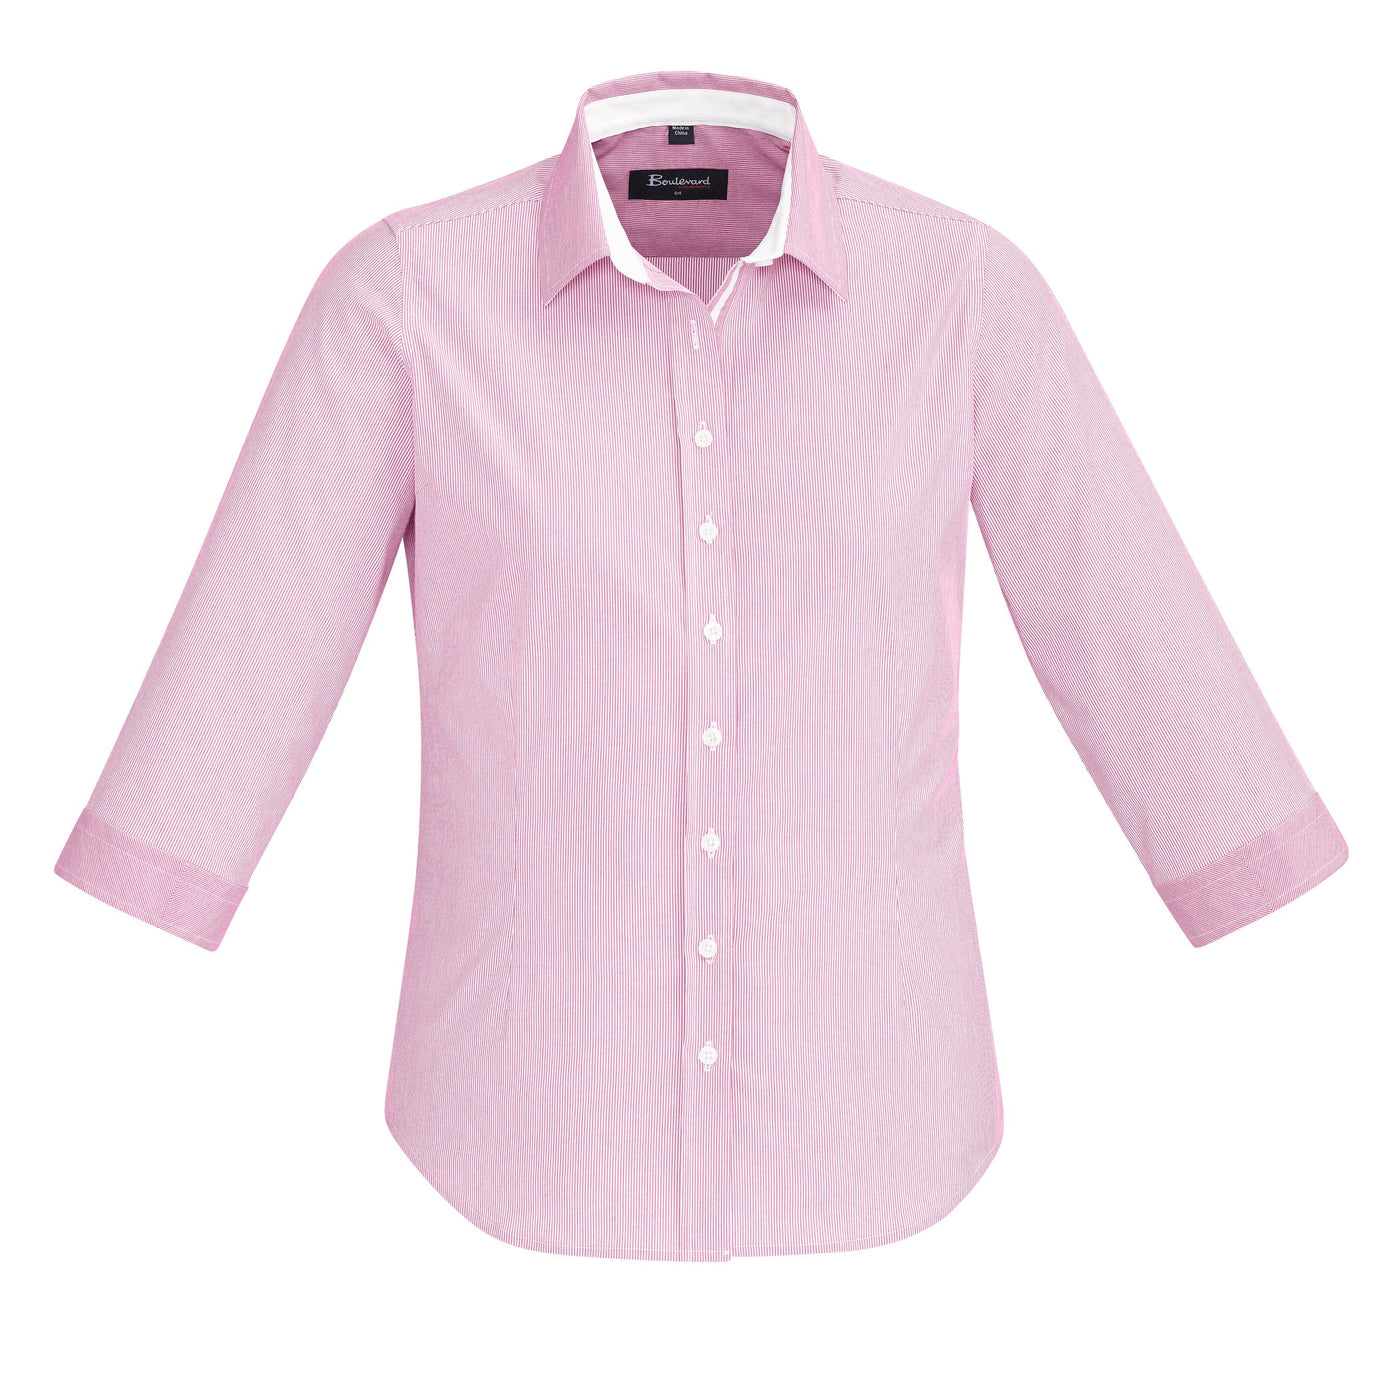 Biz Collection 5th Avenue Ladies Shirt ¾ Sleeve - Womens